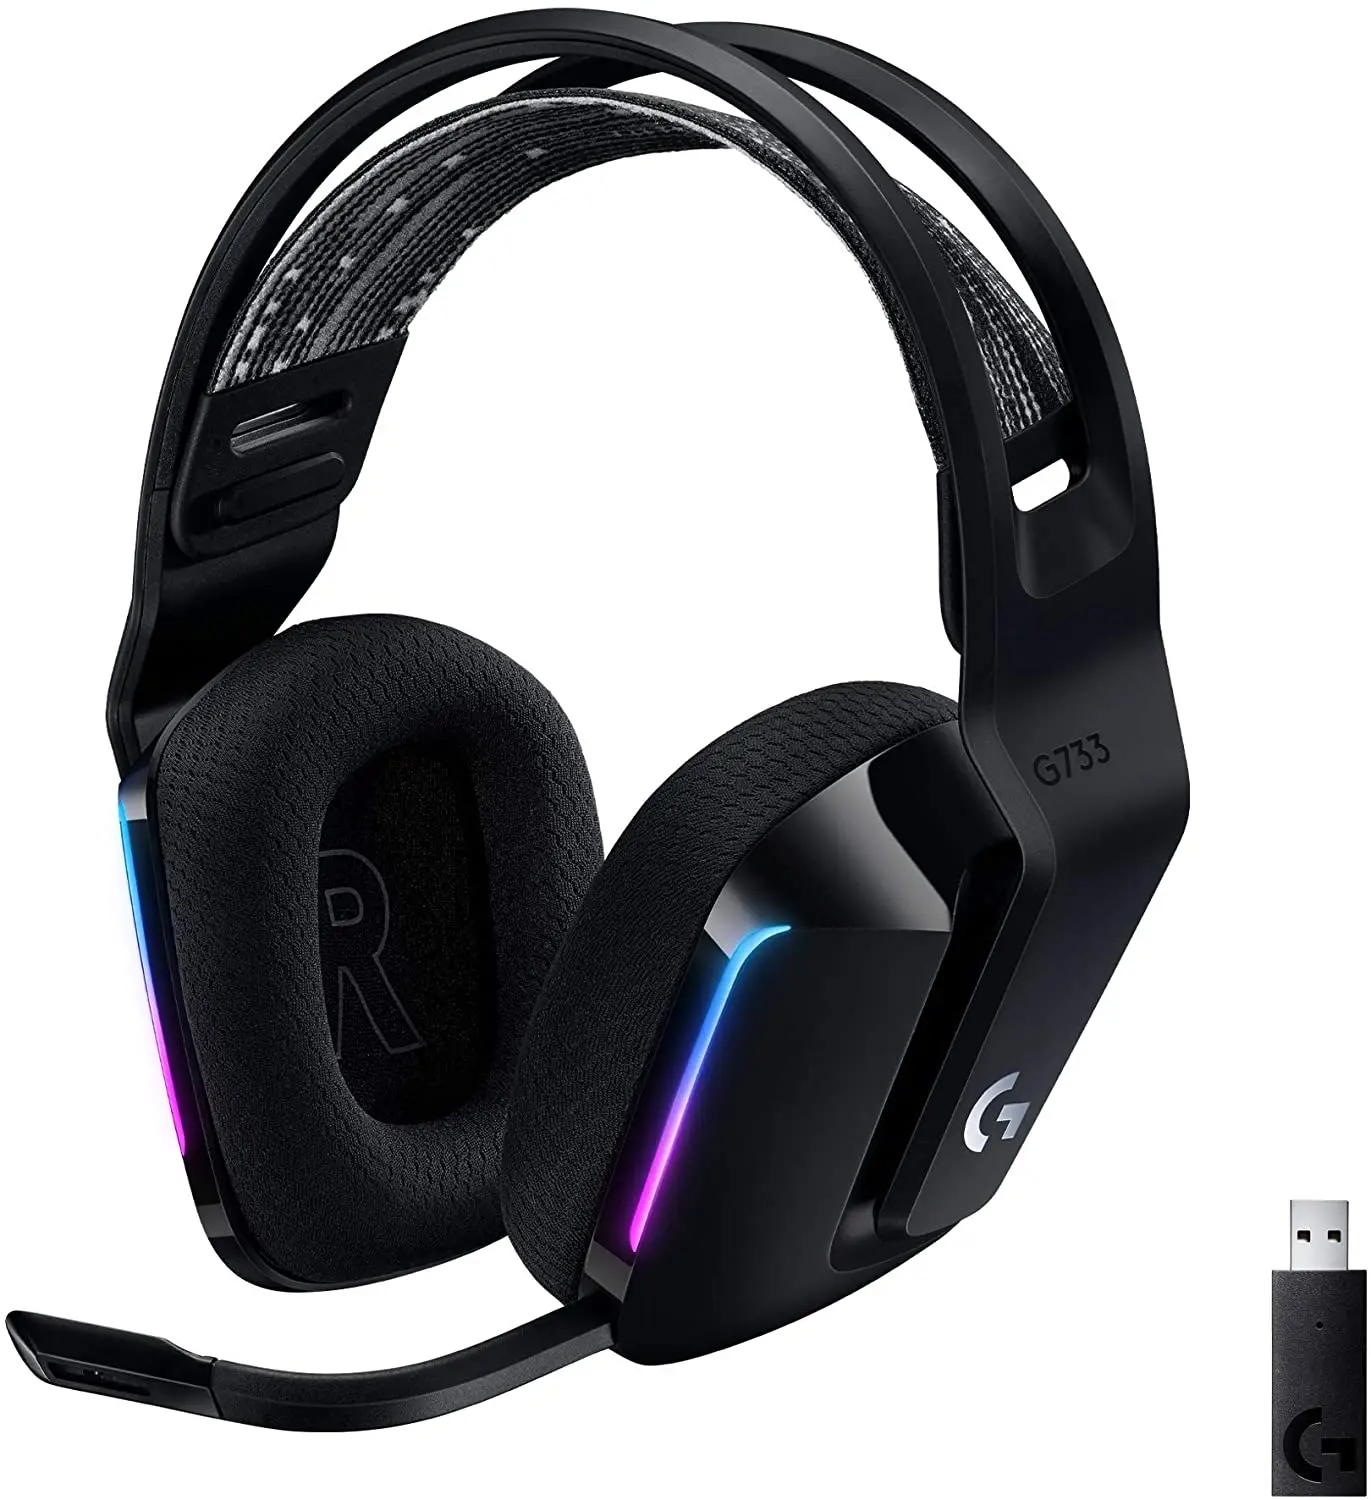 

Logitech G733 Lightspeed Wireless Gaming Headset with Suspension Headband, Lightsync RGB, Blue VO!CE mic technology